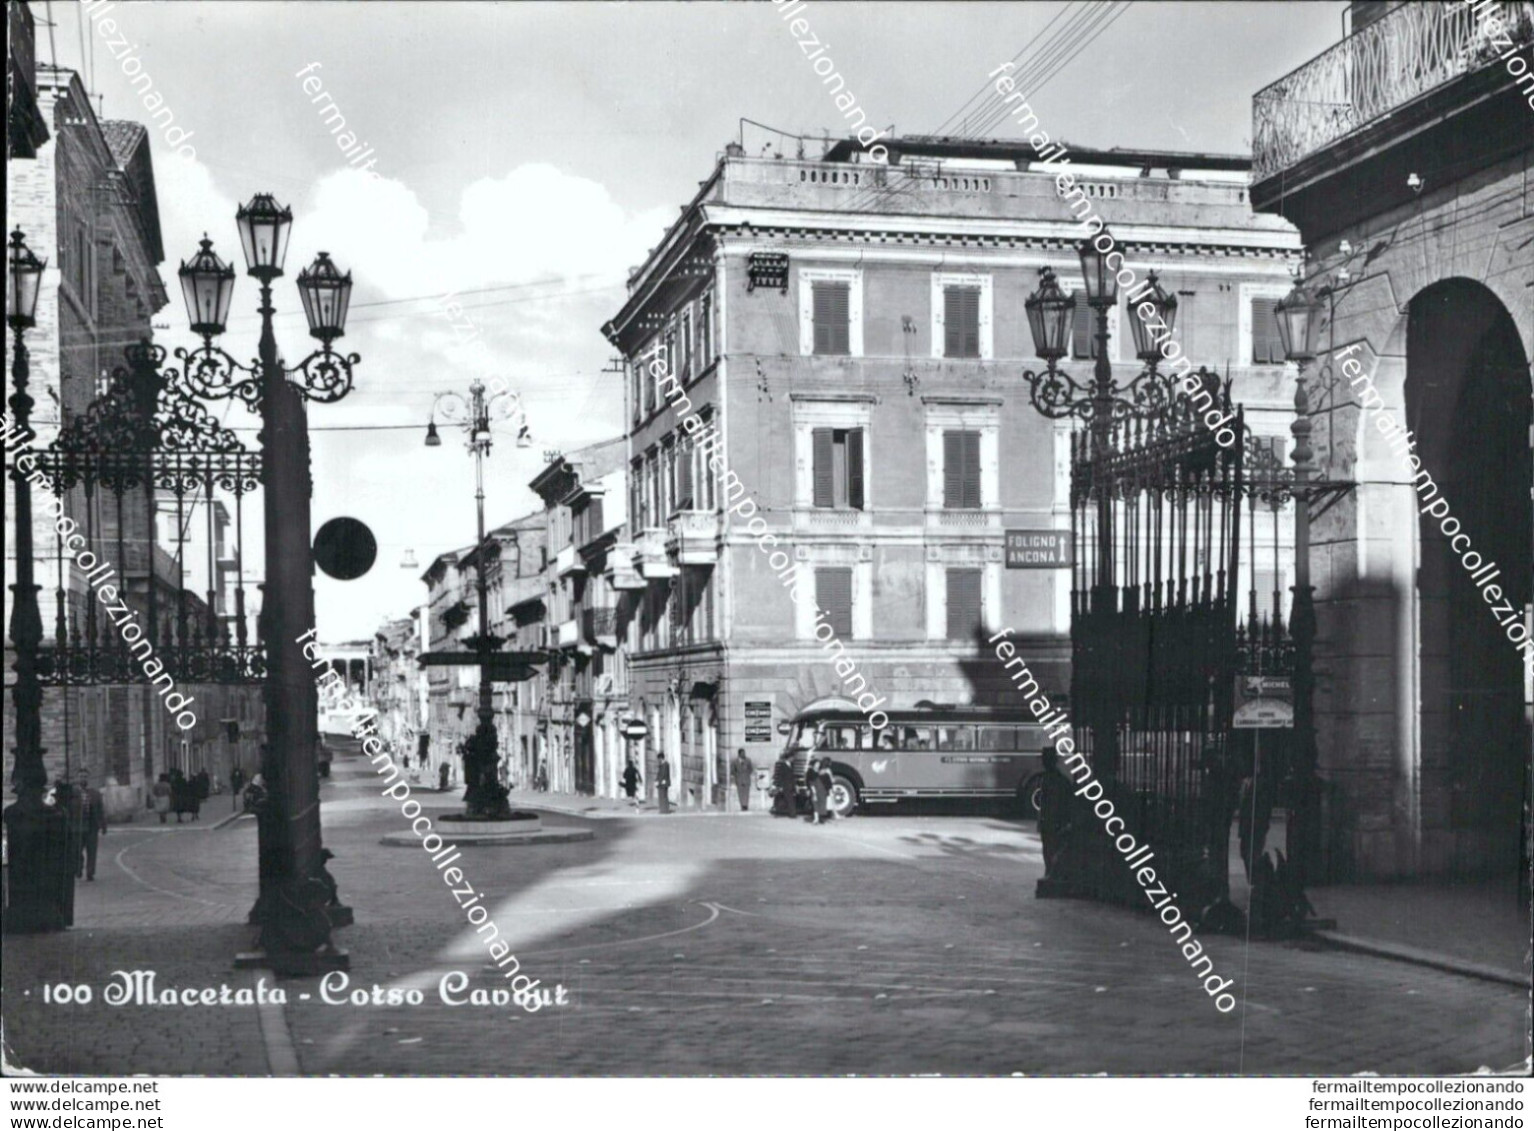 At363 Cartolina Macerata Citta' Corso Cavour - Macerata